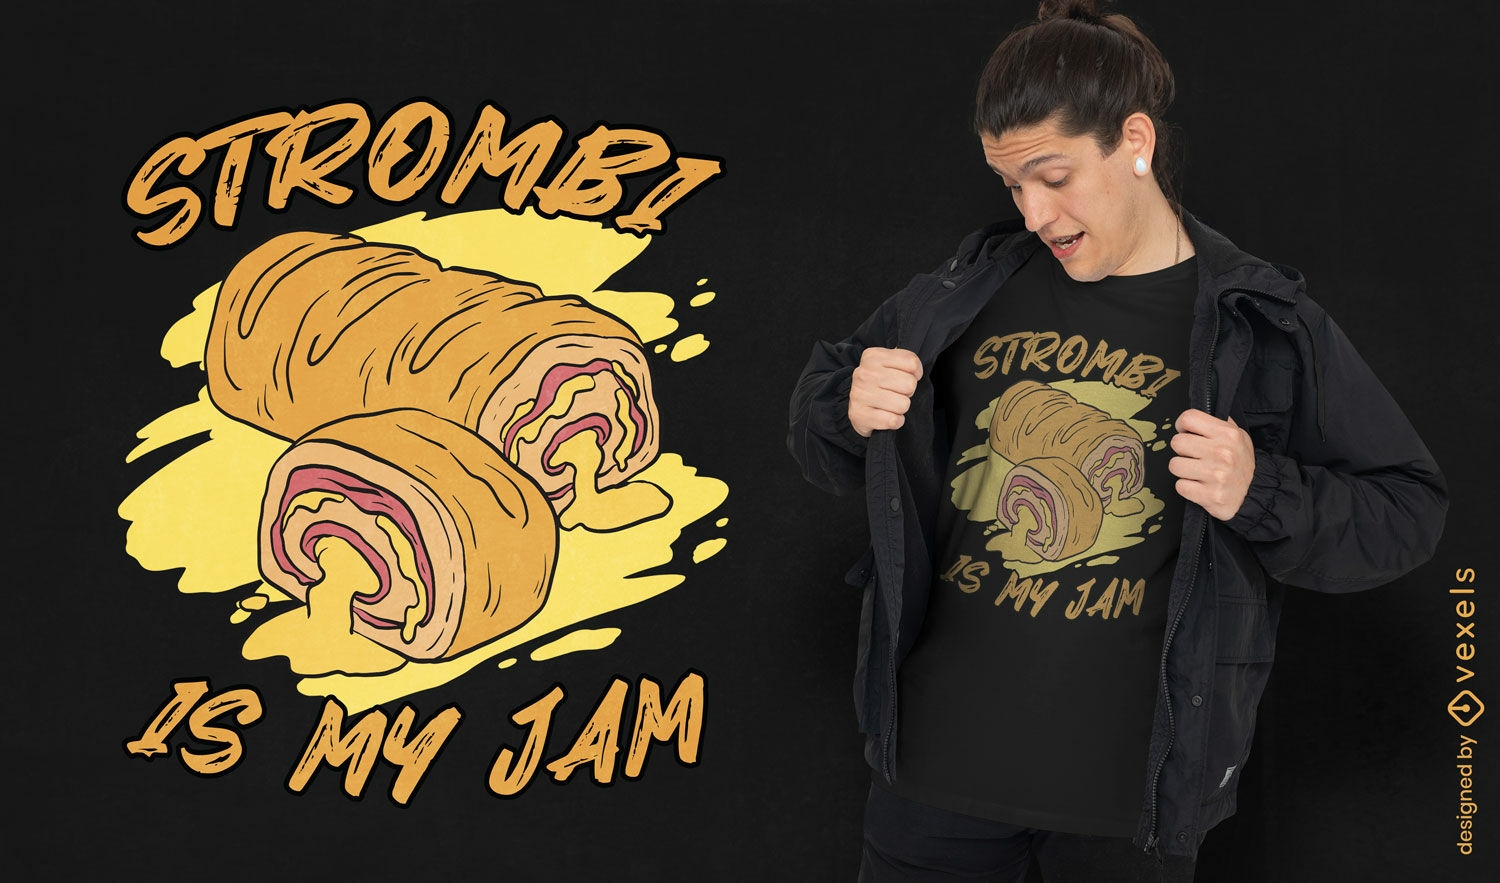 Strombi is my jam t-shirt design